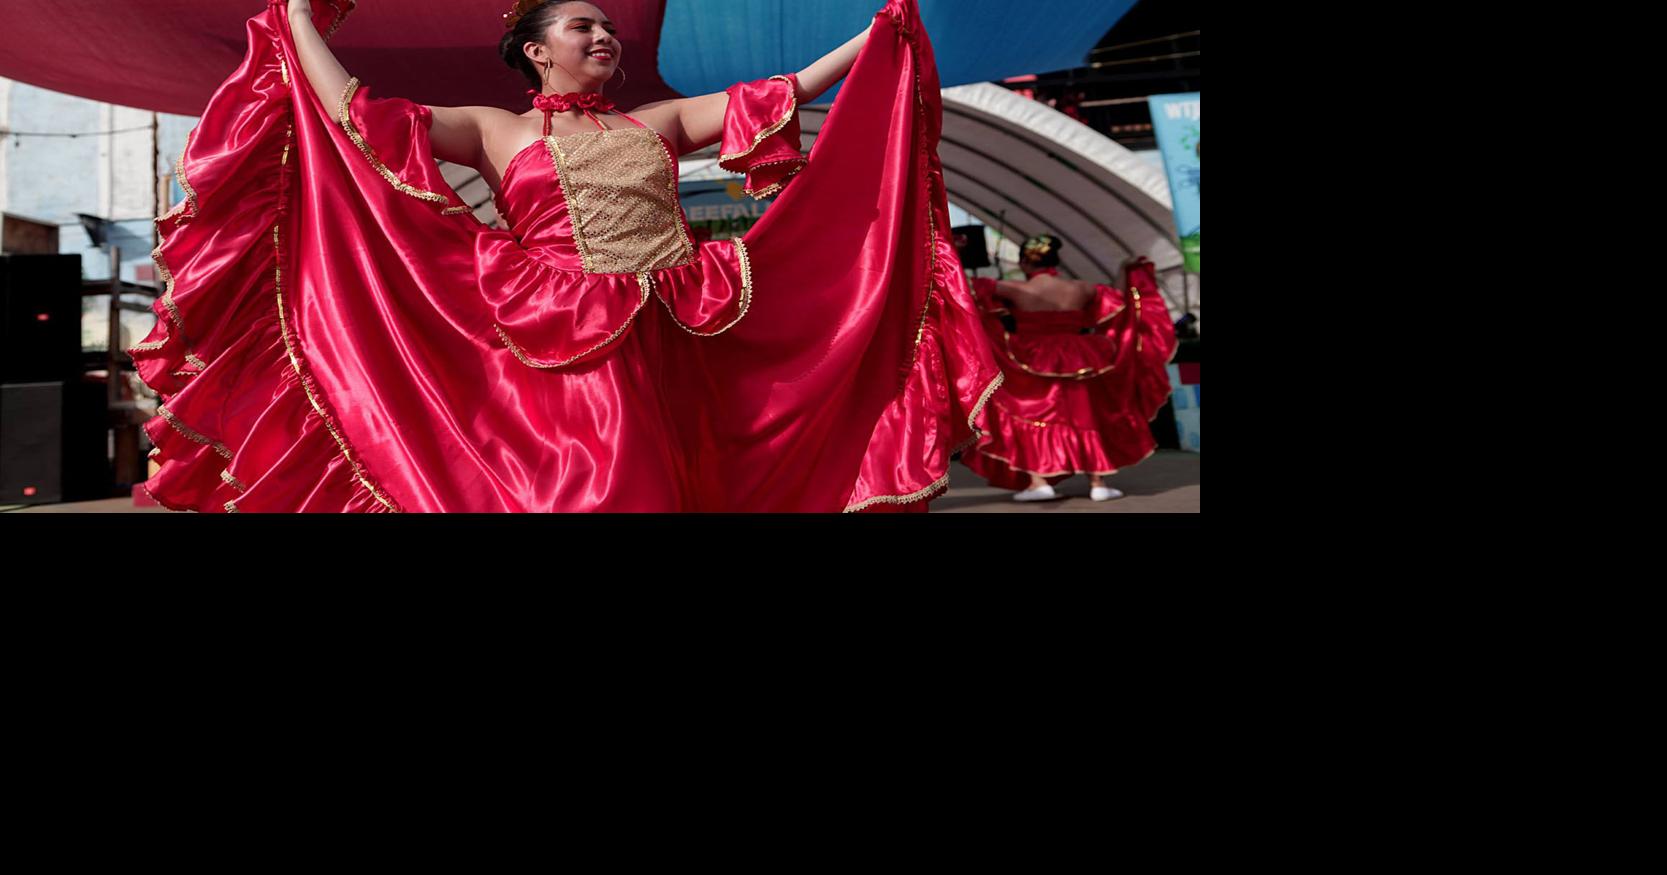 Cville Sabroso Festival celebrates Latin American culture in